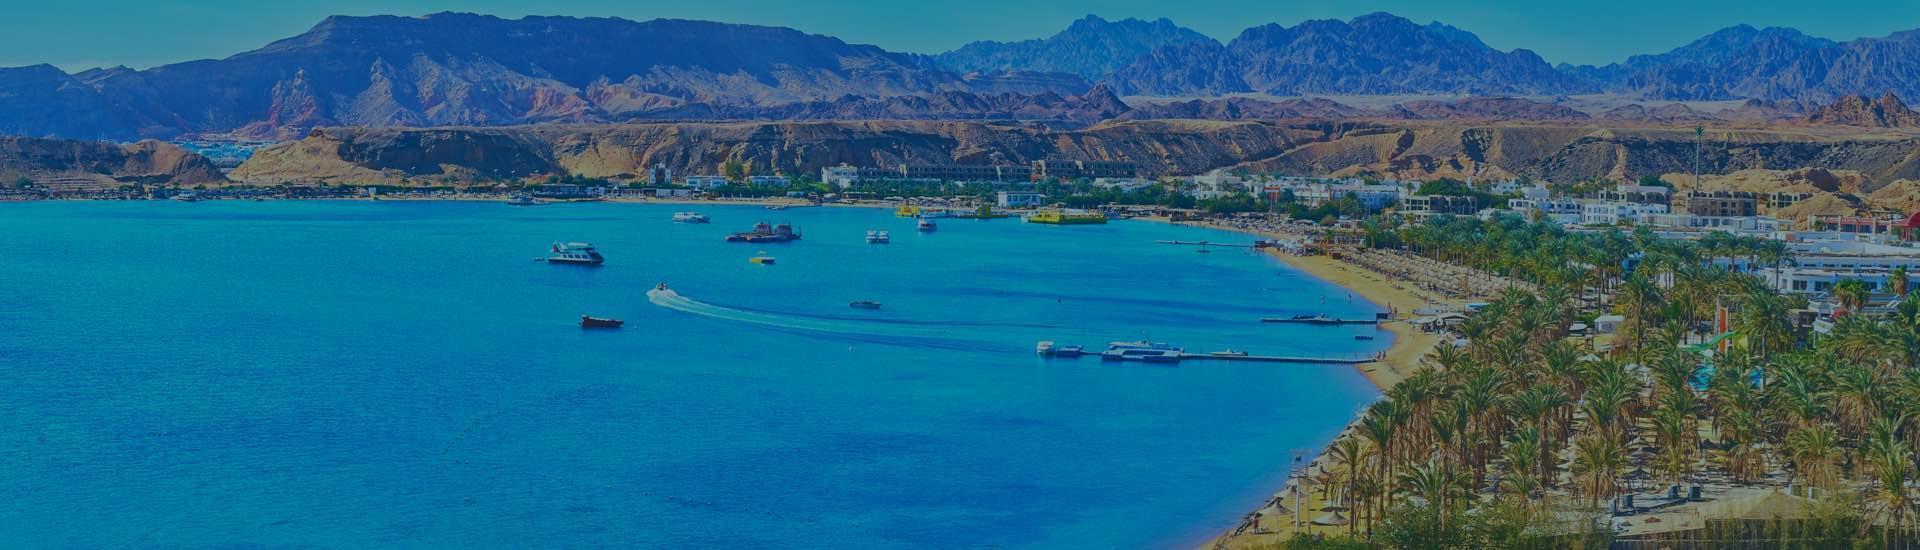 Book Madina to Sharm El Sheikh Flights